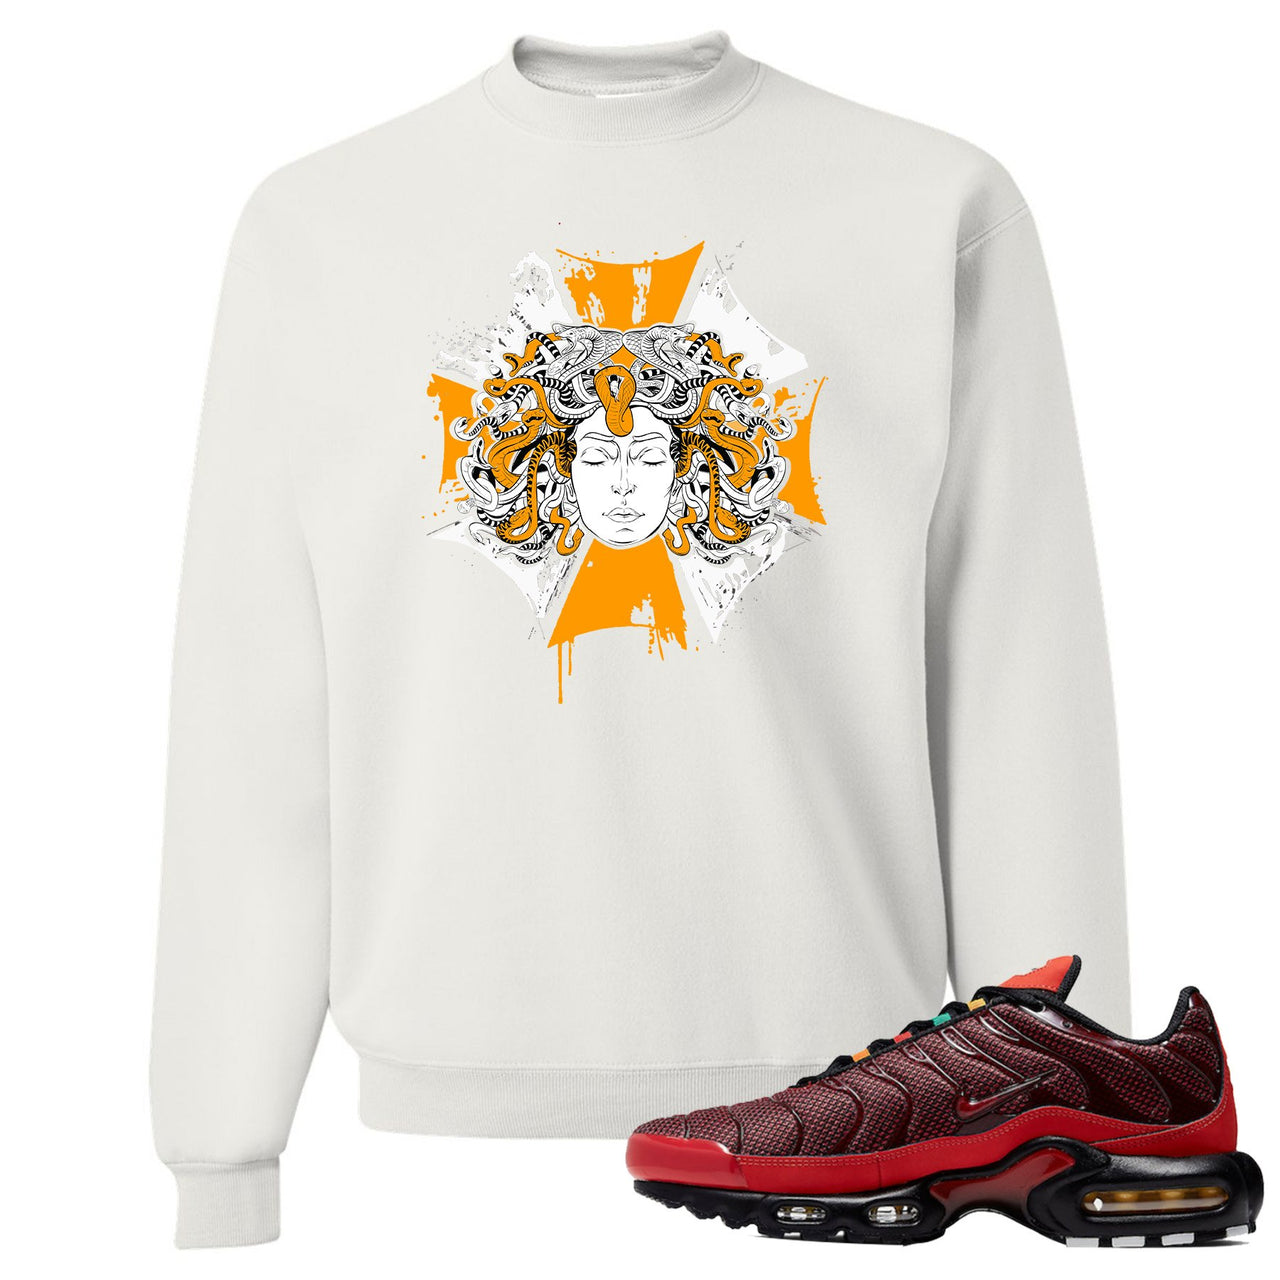 printed on the front of the air max plus sunburst sneaker matching white crewneck sweatshirt is the medusa sunburst logo